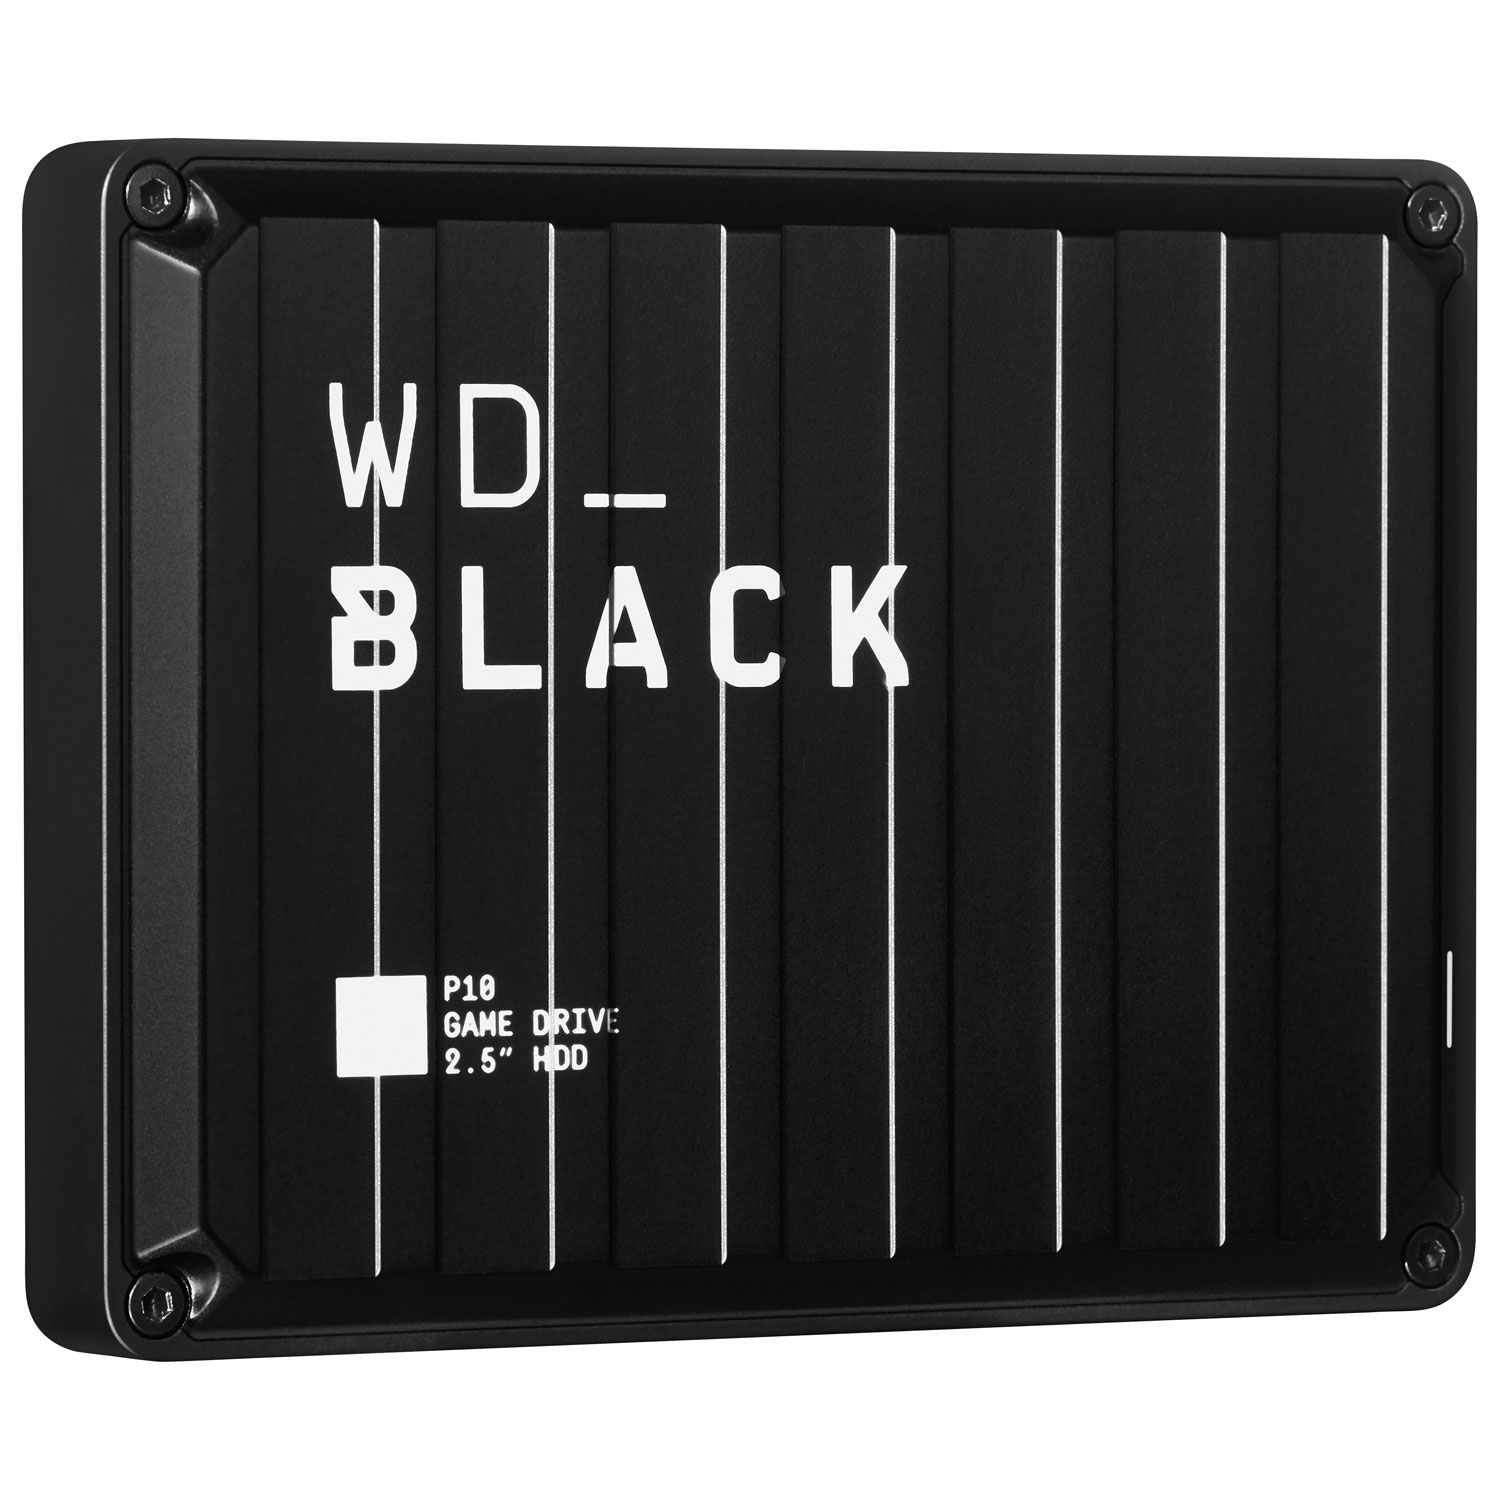 WD BLACK 6TB USB 3.2 External Hard Drive (WDBZ7D0060BBK-WESN) - Black